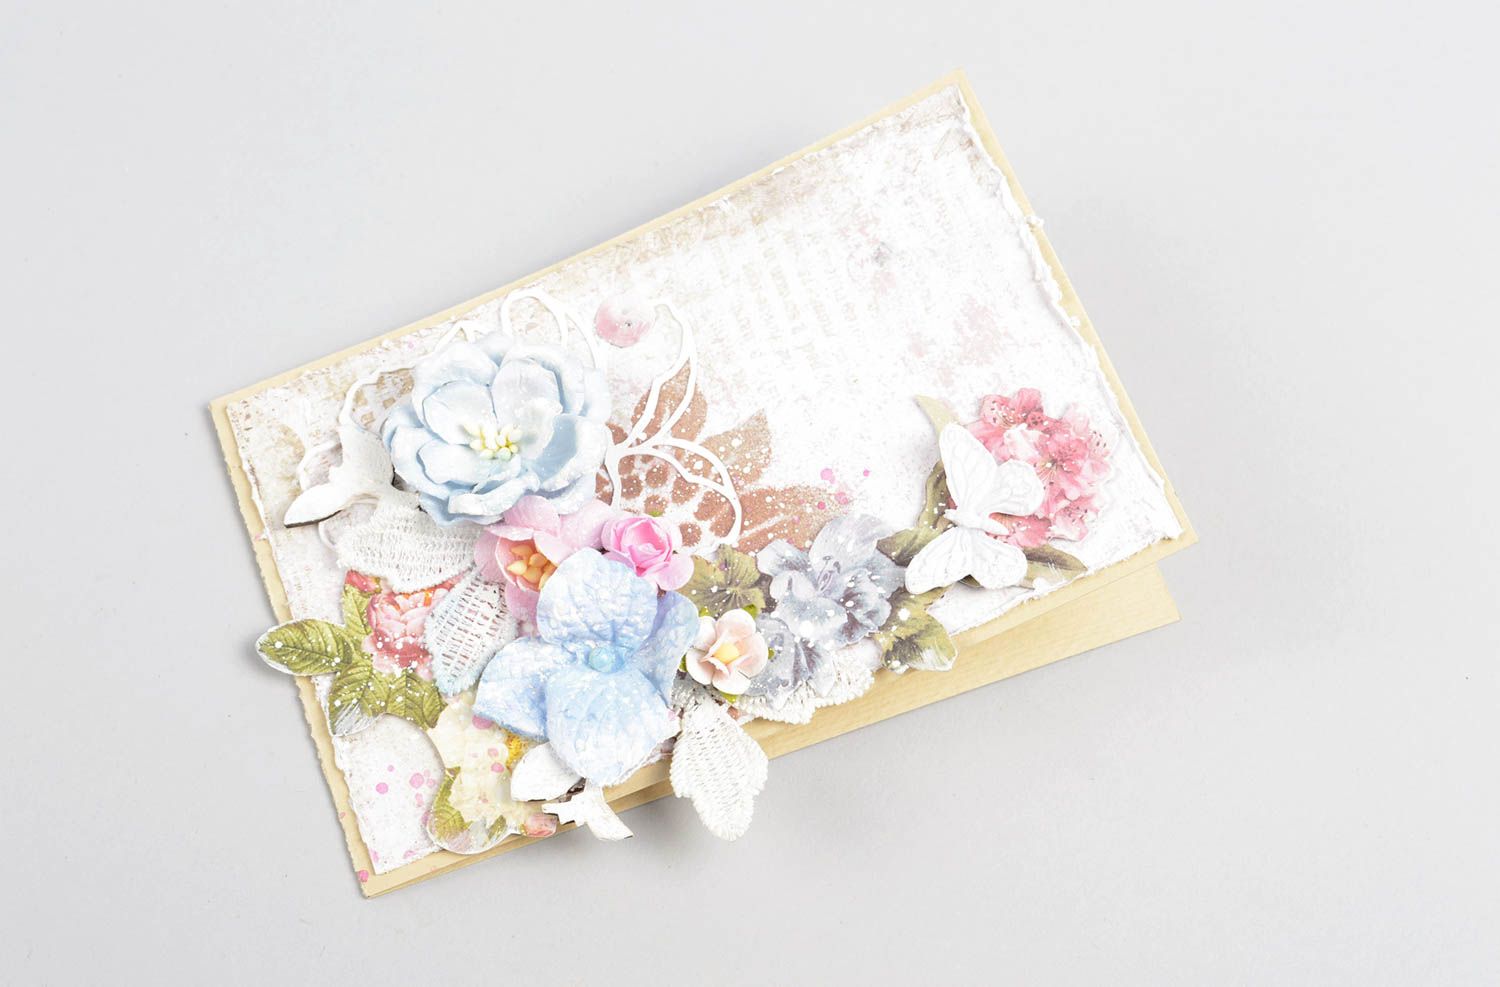 Unusual handmade wedding envelope scrapbook ideas greeting card designs photo 1